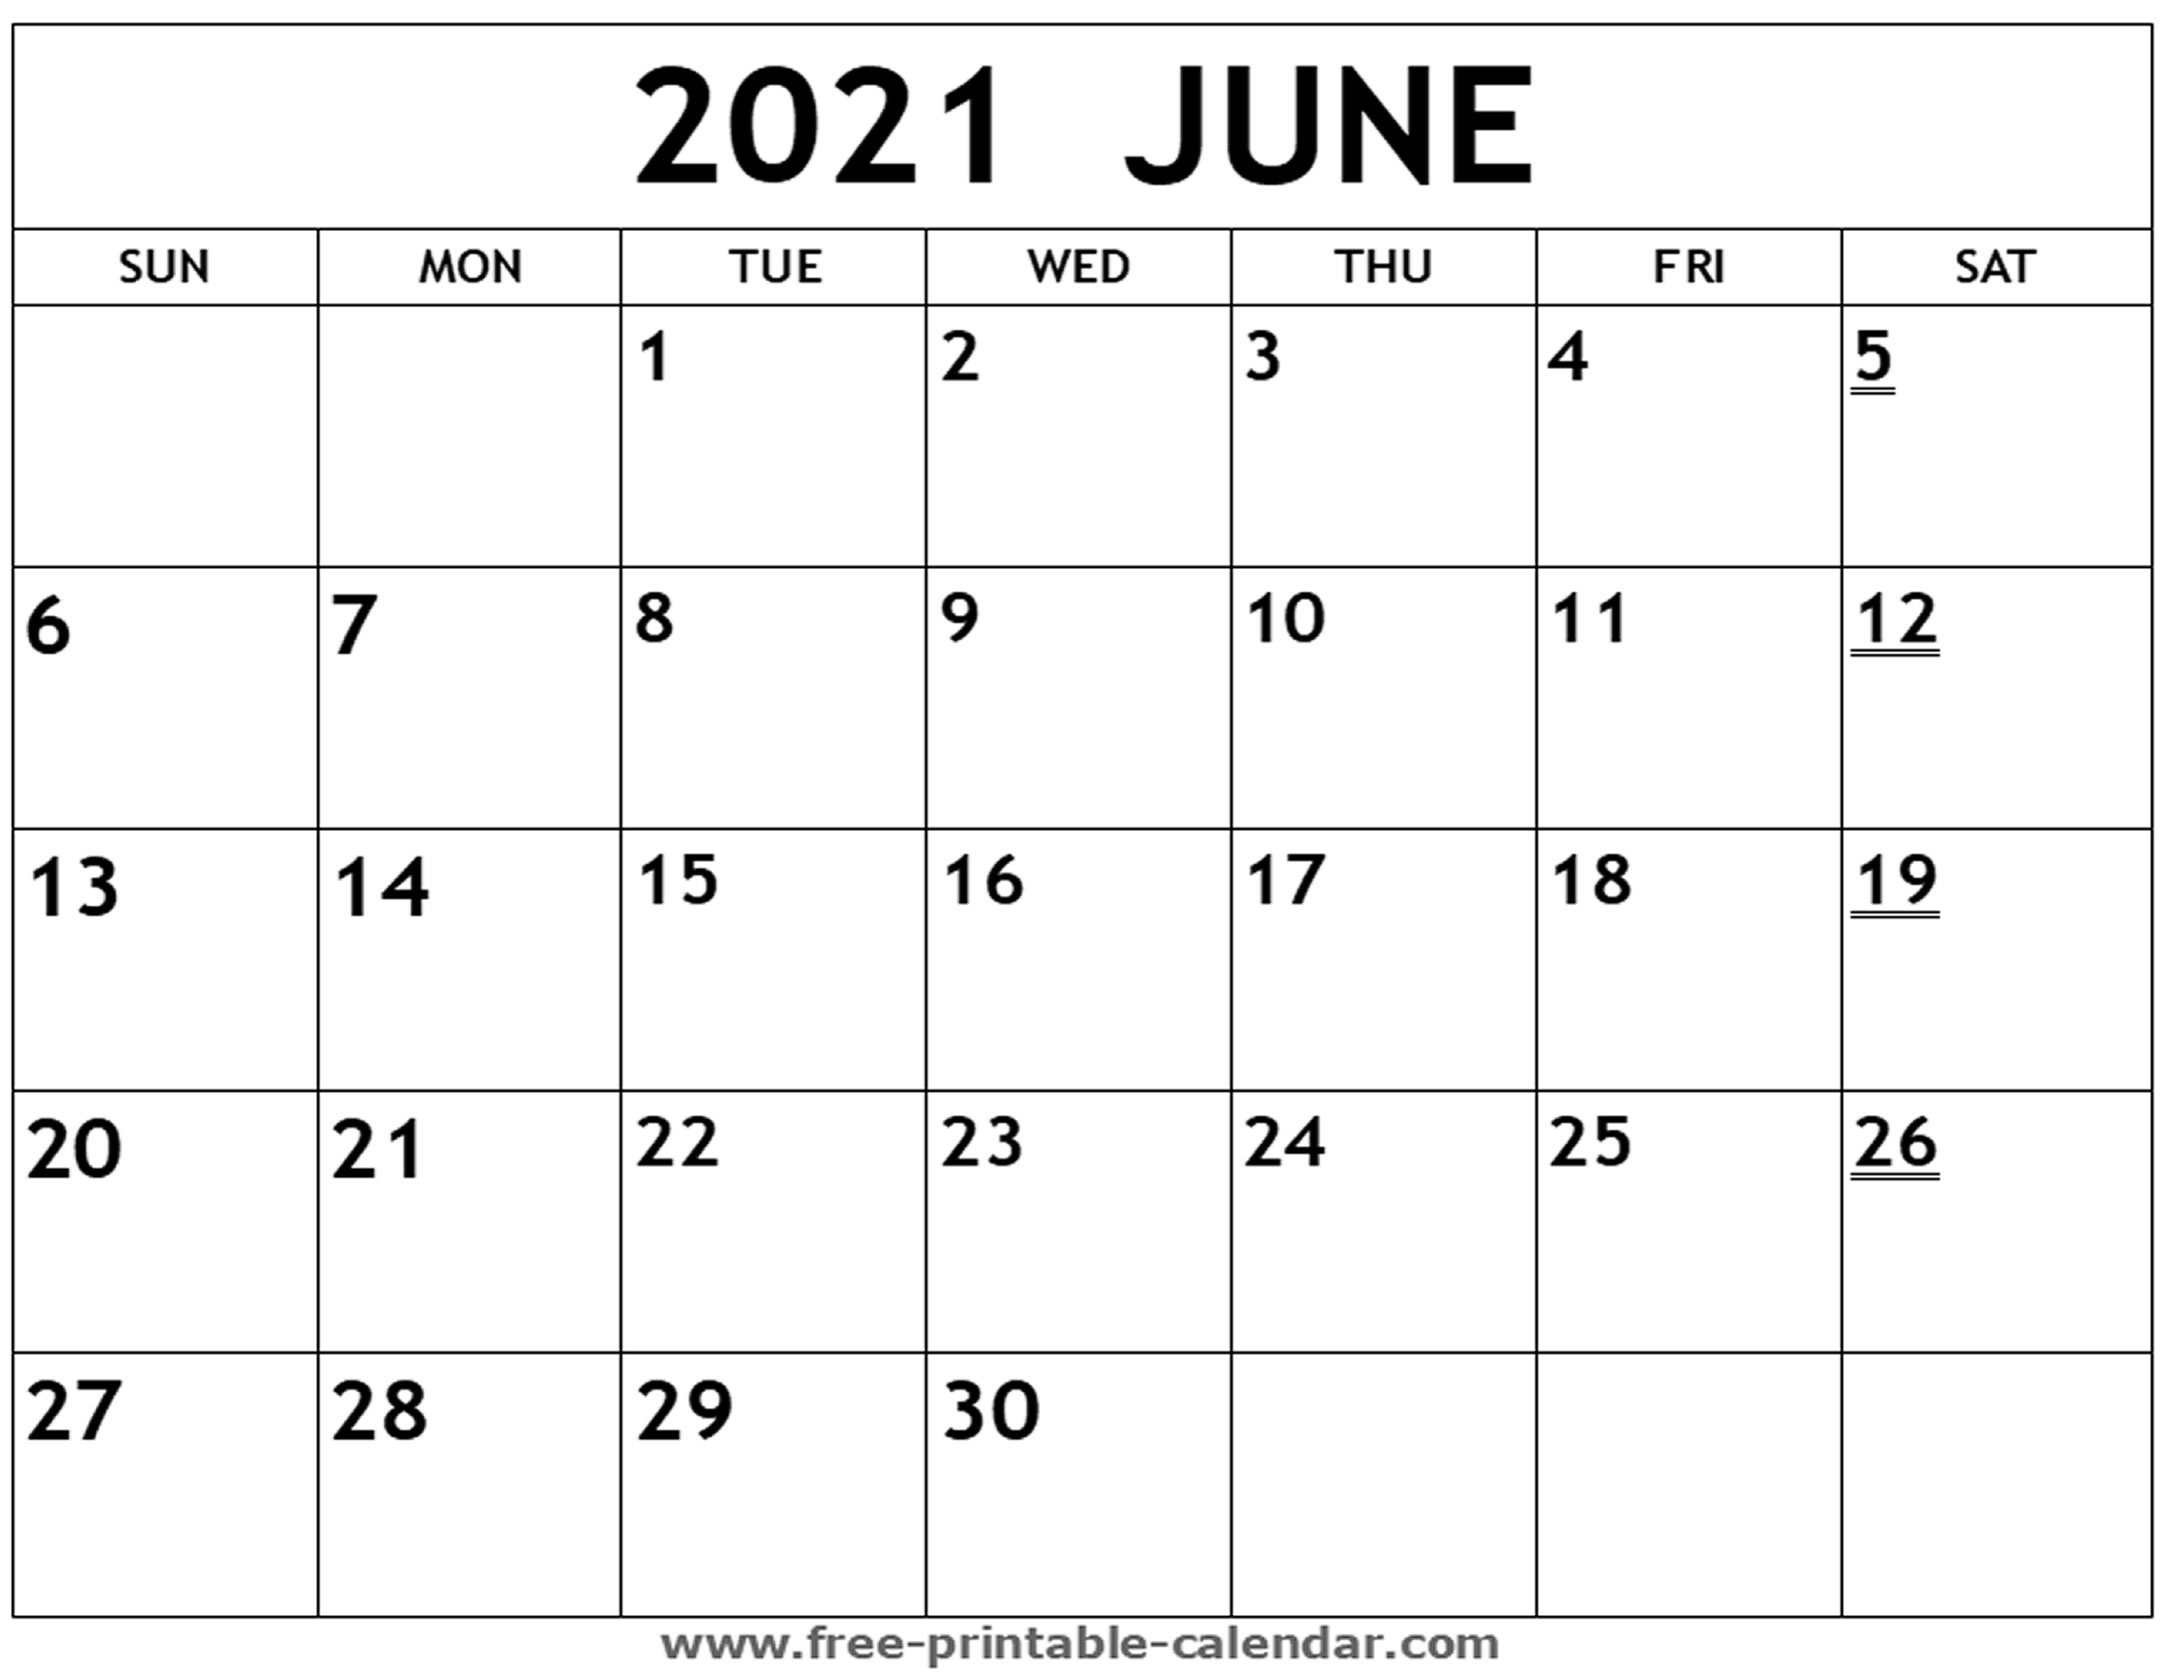 Printable 2021 June Calendar - Free-Printable-Calendar  Free Print 2021 Calendars Without Downloading